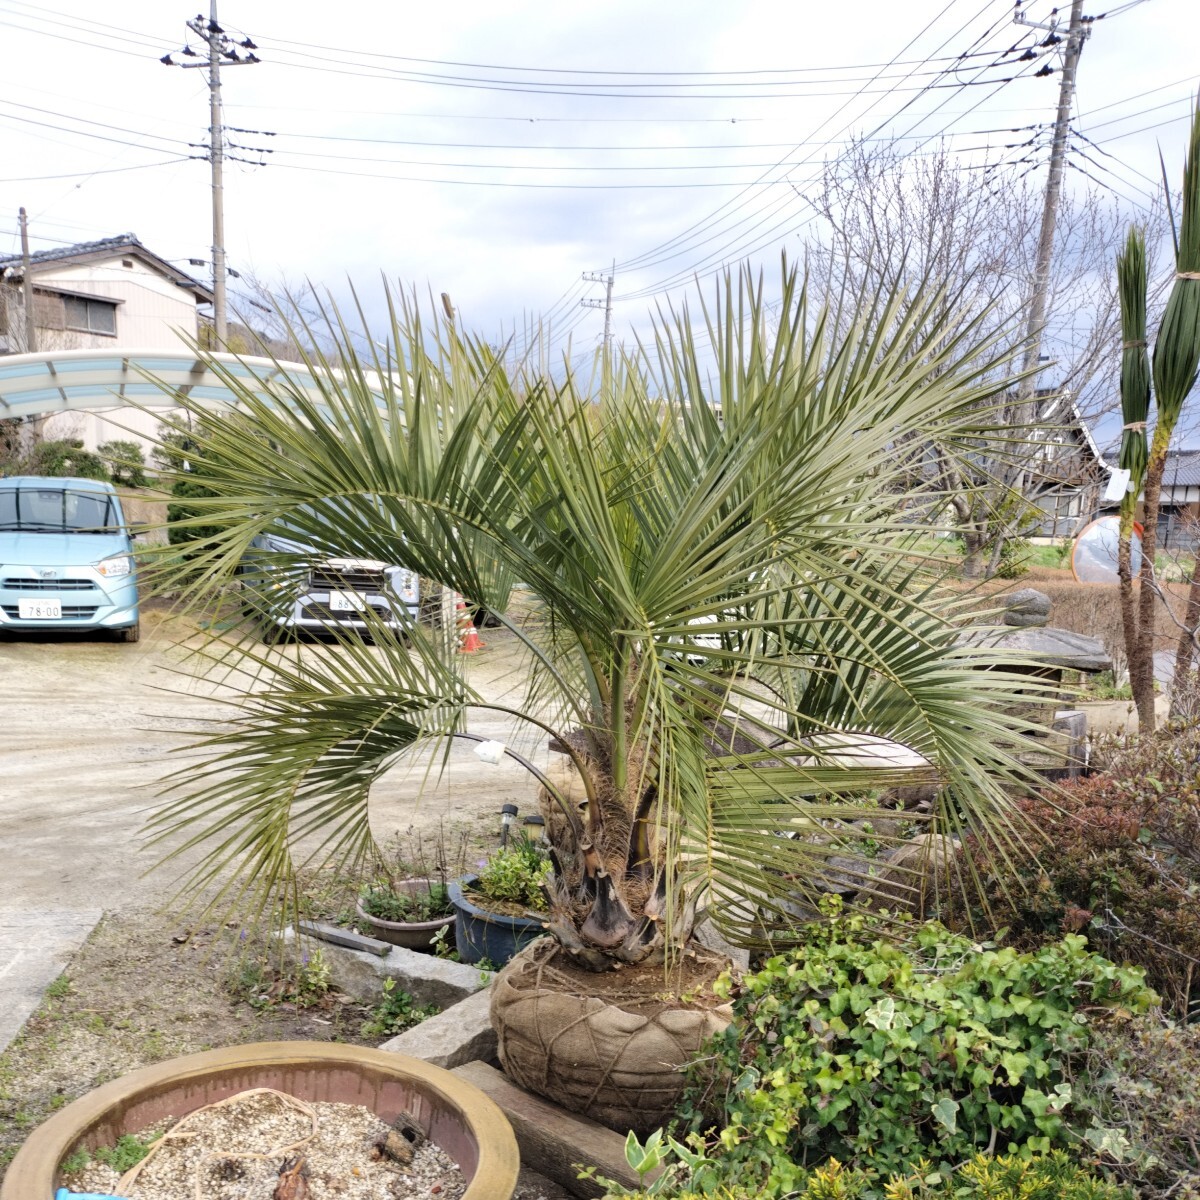  here s cocos nucifera flower . attaching Tsukuba city ... receipt limitation D